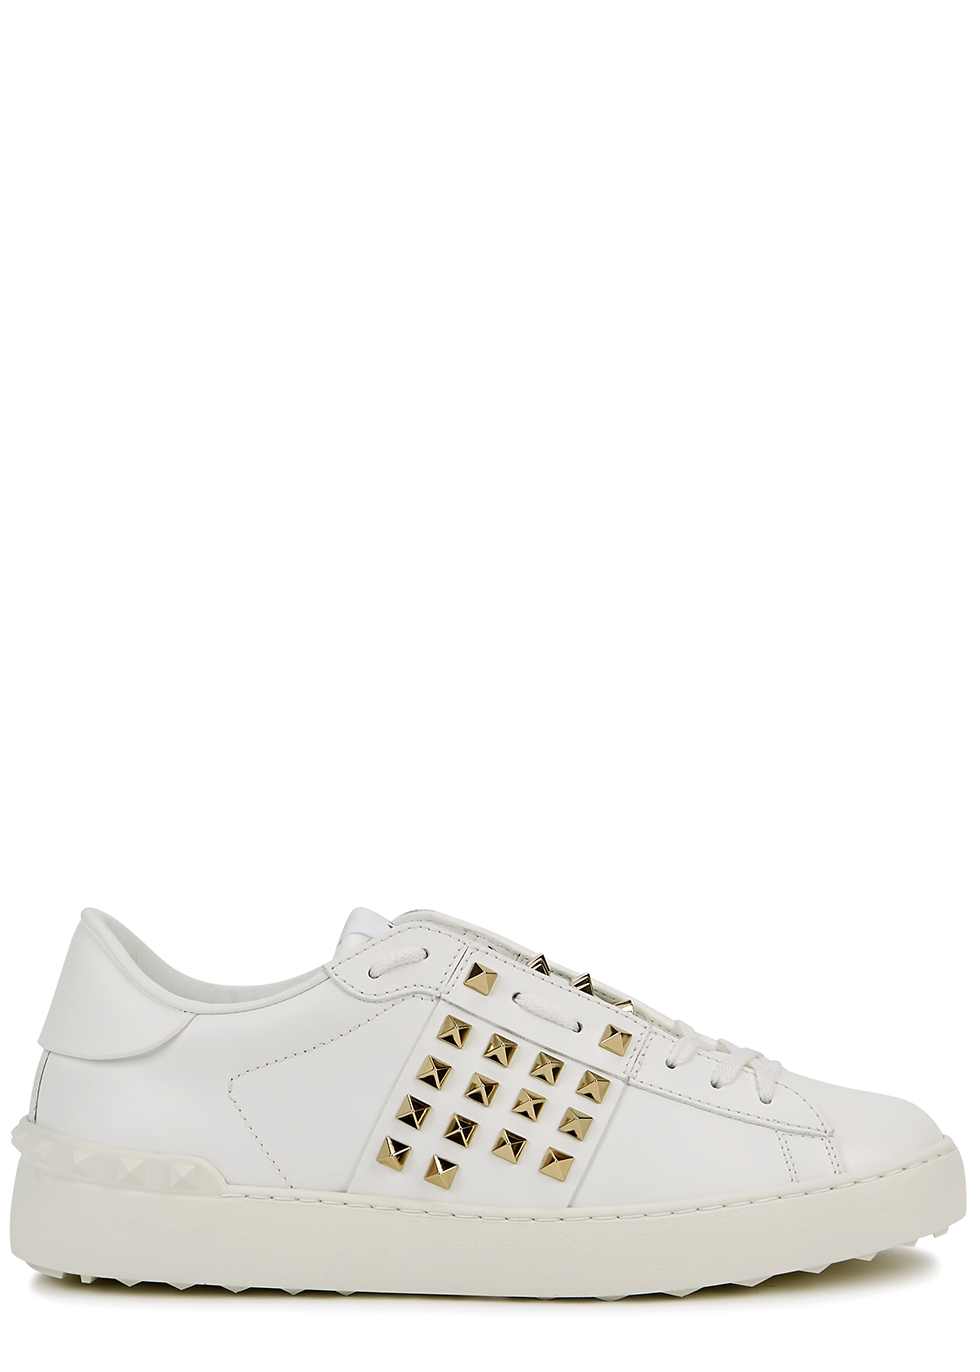 Valentino Garavani Rockstud Untitled white leather sneakers